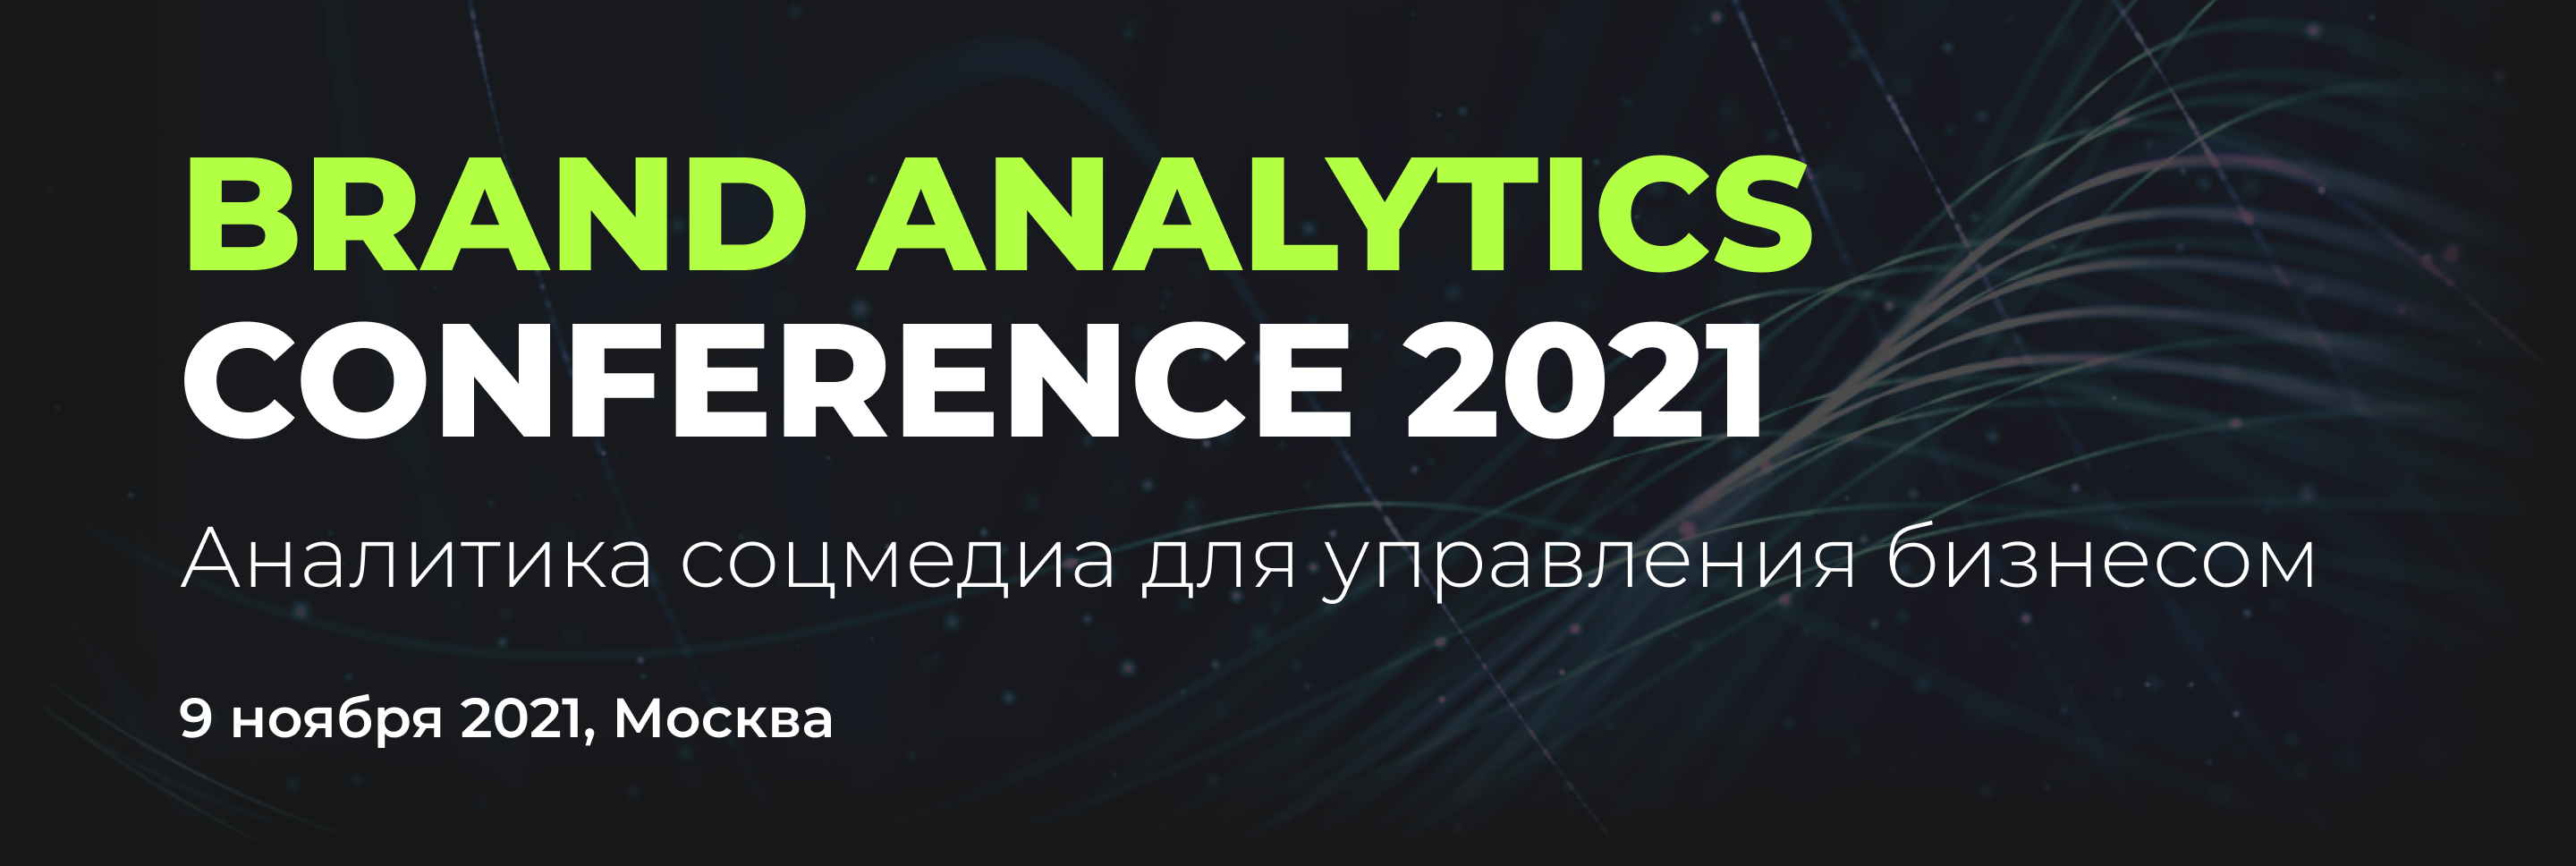 Brand Analytics Conference 2021